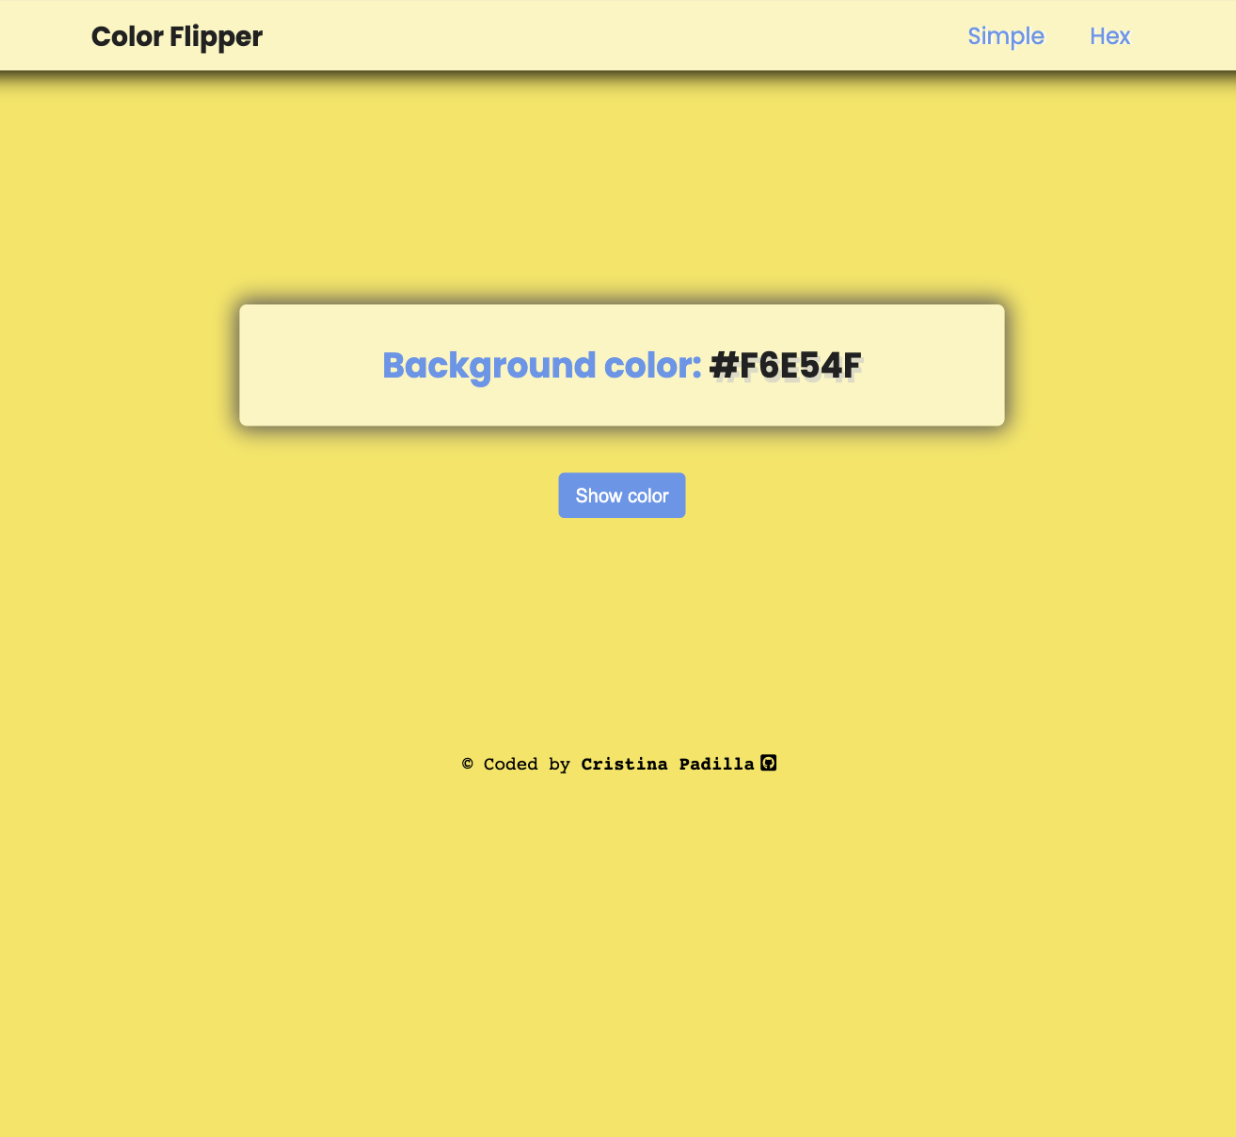 Color Flipper project